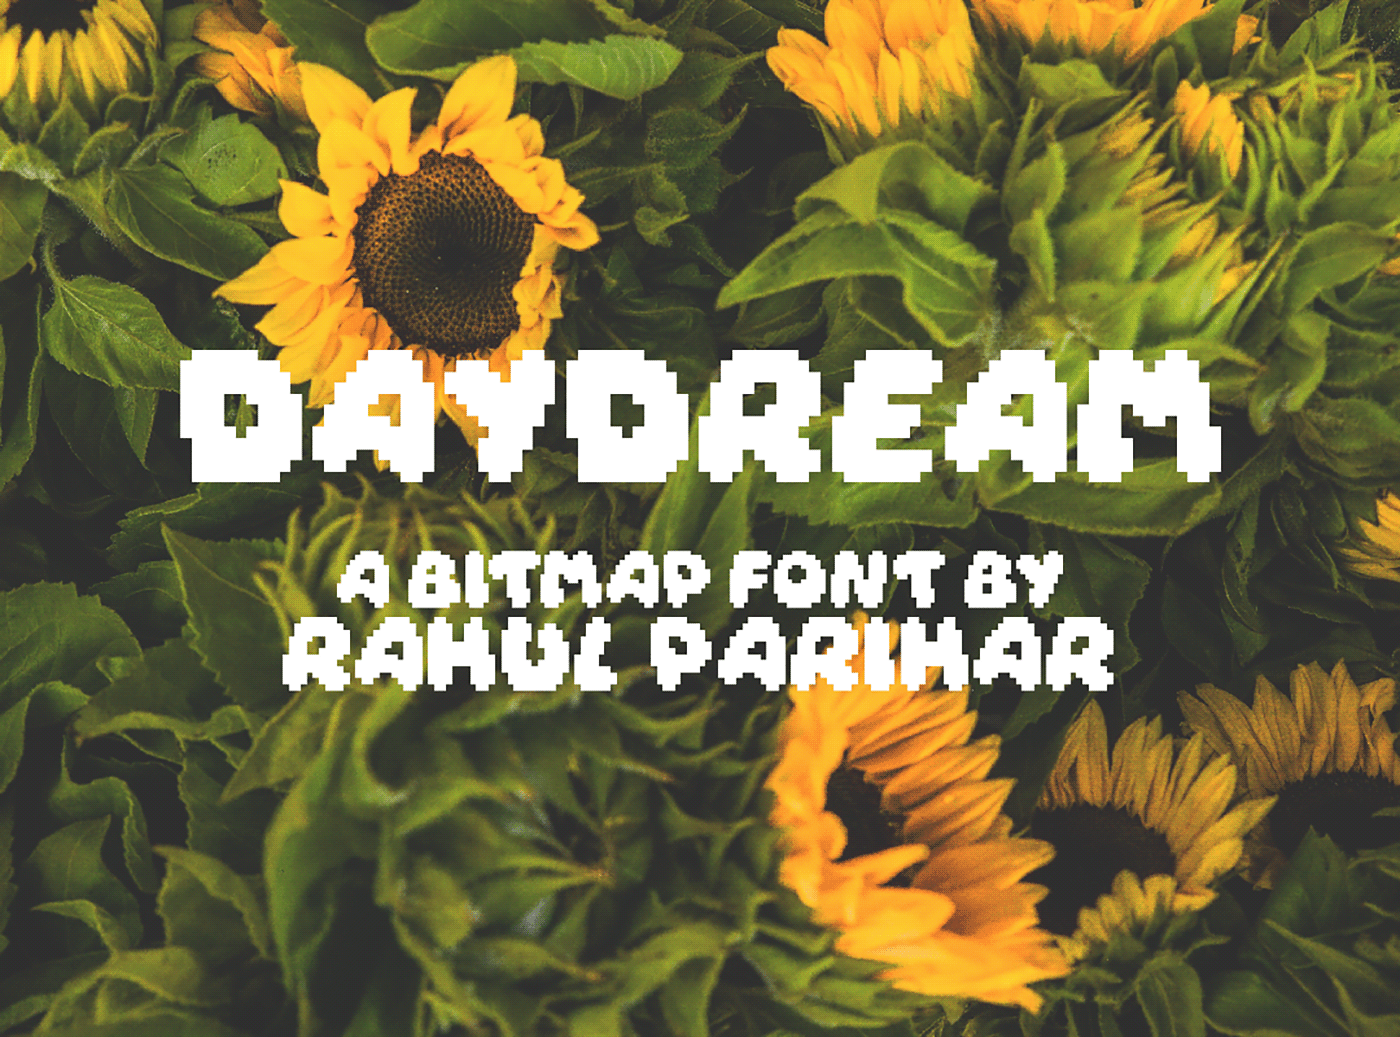 8 bit bitmap Daydream Doublegum font free Pixel art rahul parihar Retro Typeface